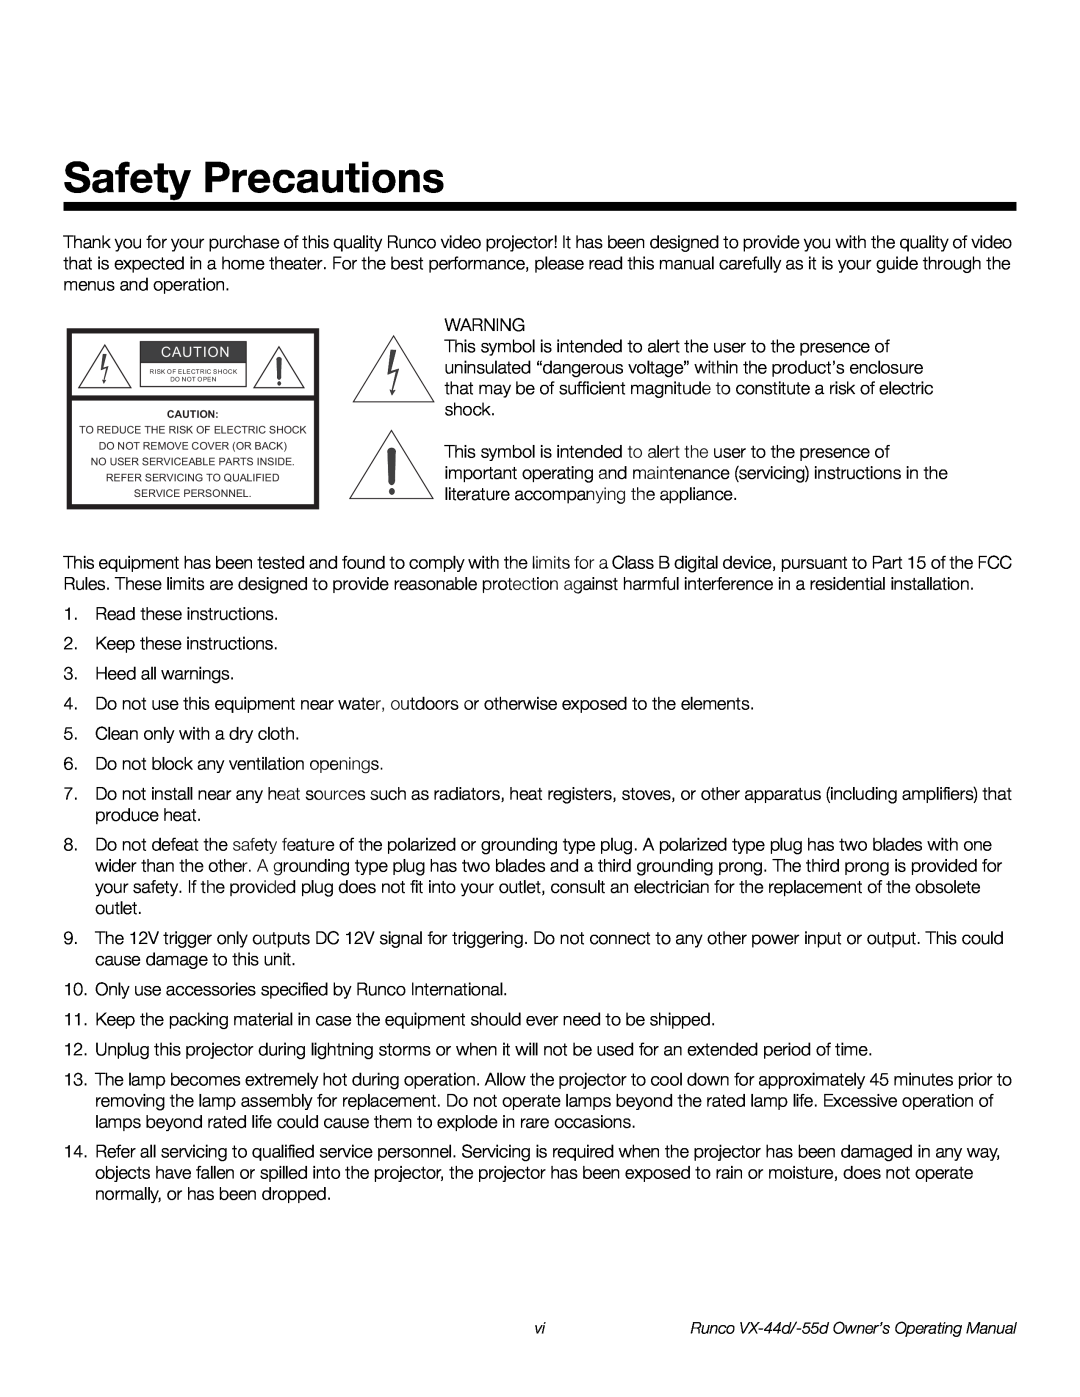 Runco 1080p manual Safety Precautions 